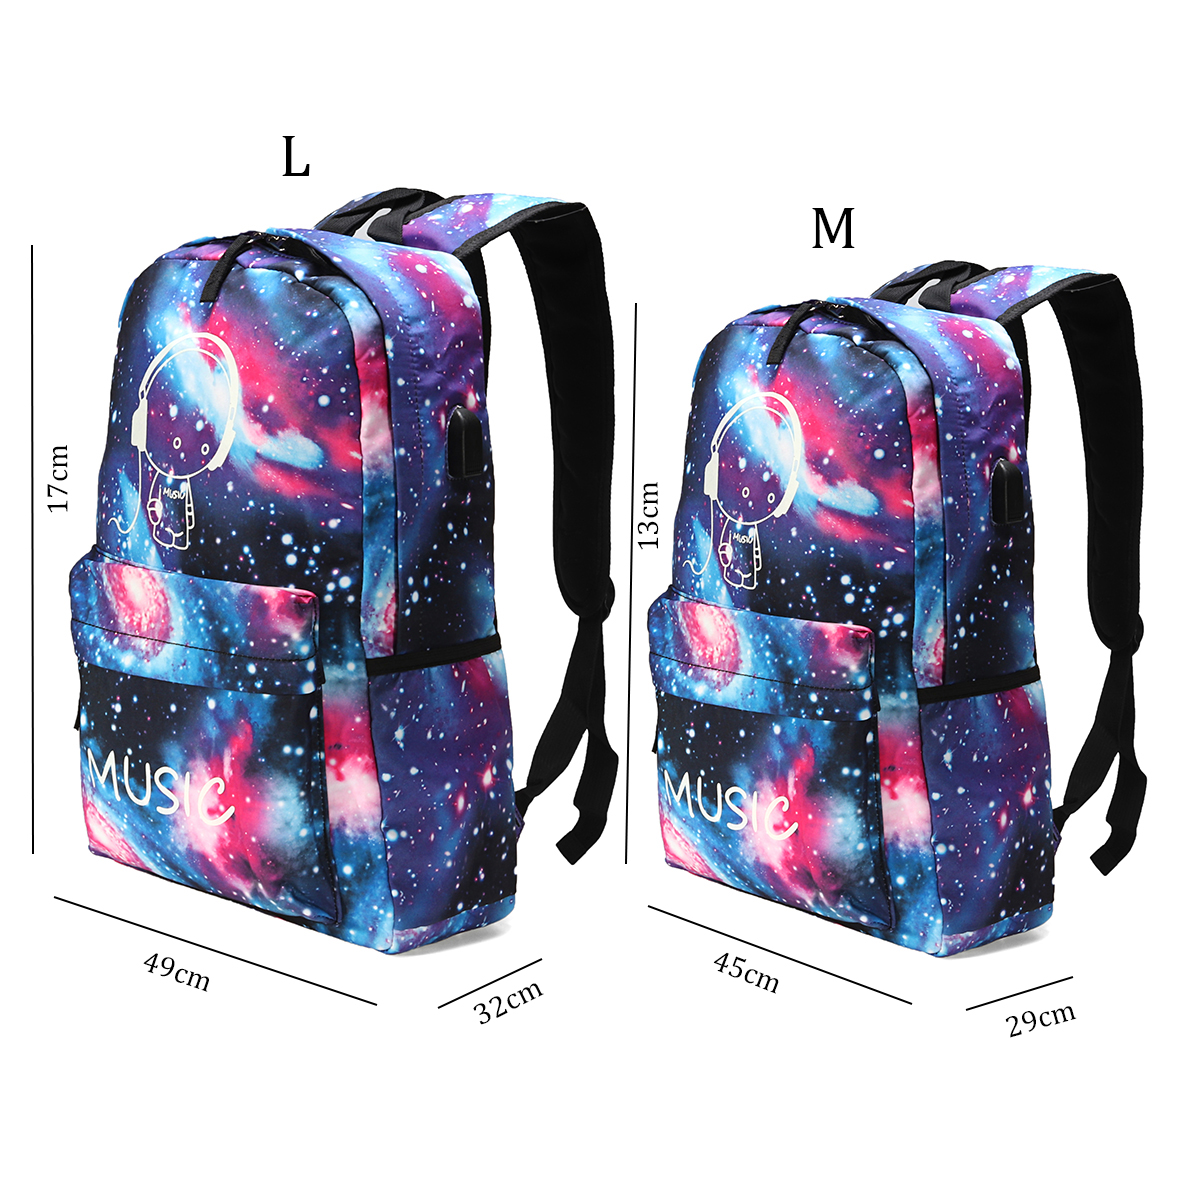 Outdoor-Night-Luminous-Backpack-USB-Oxford-School-Bag-Shoulder-Bag-Waterproof-Handbag-1373775-2